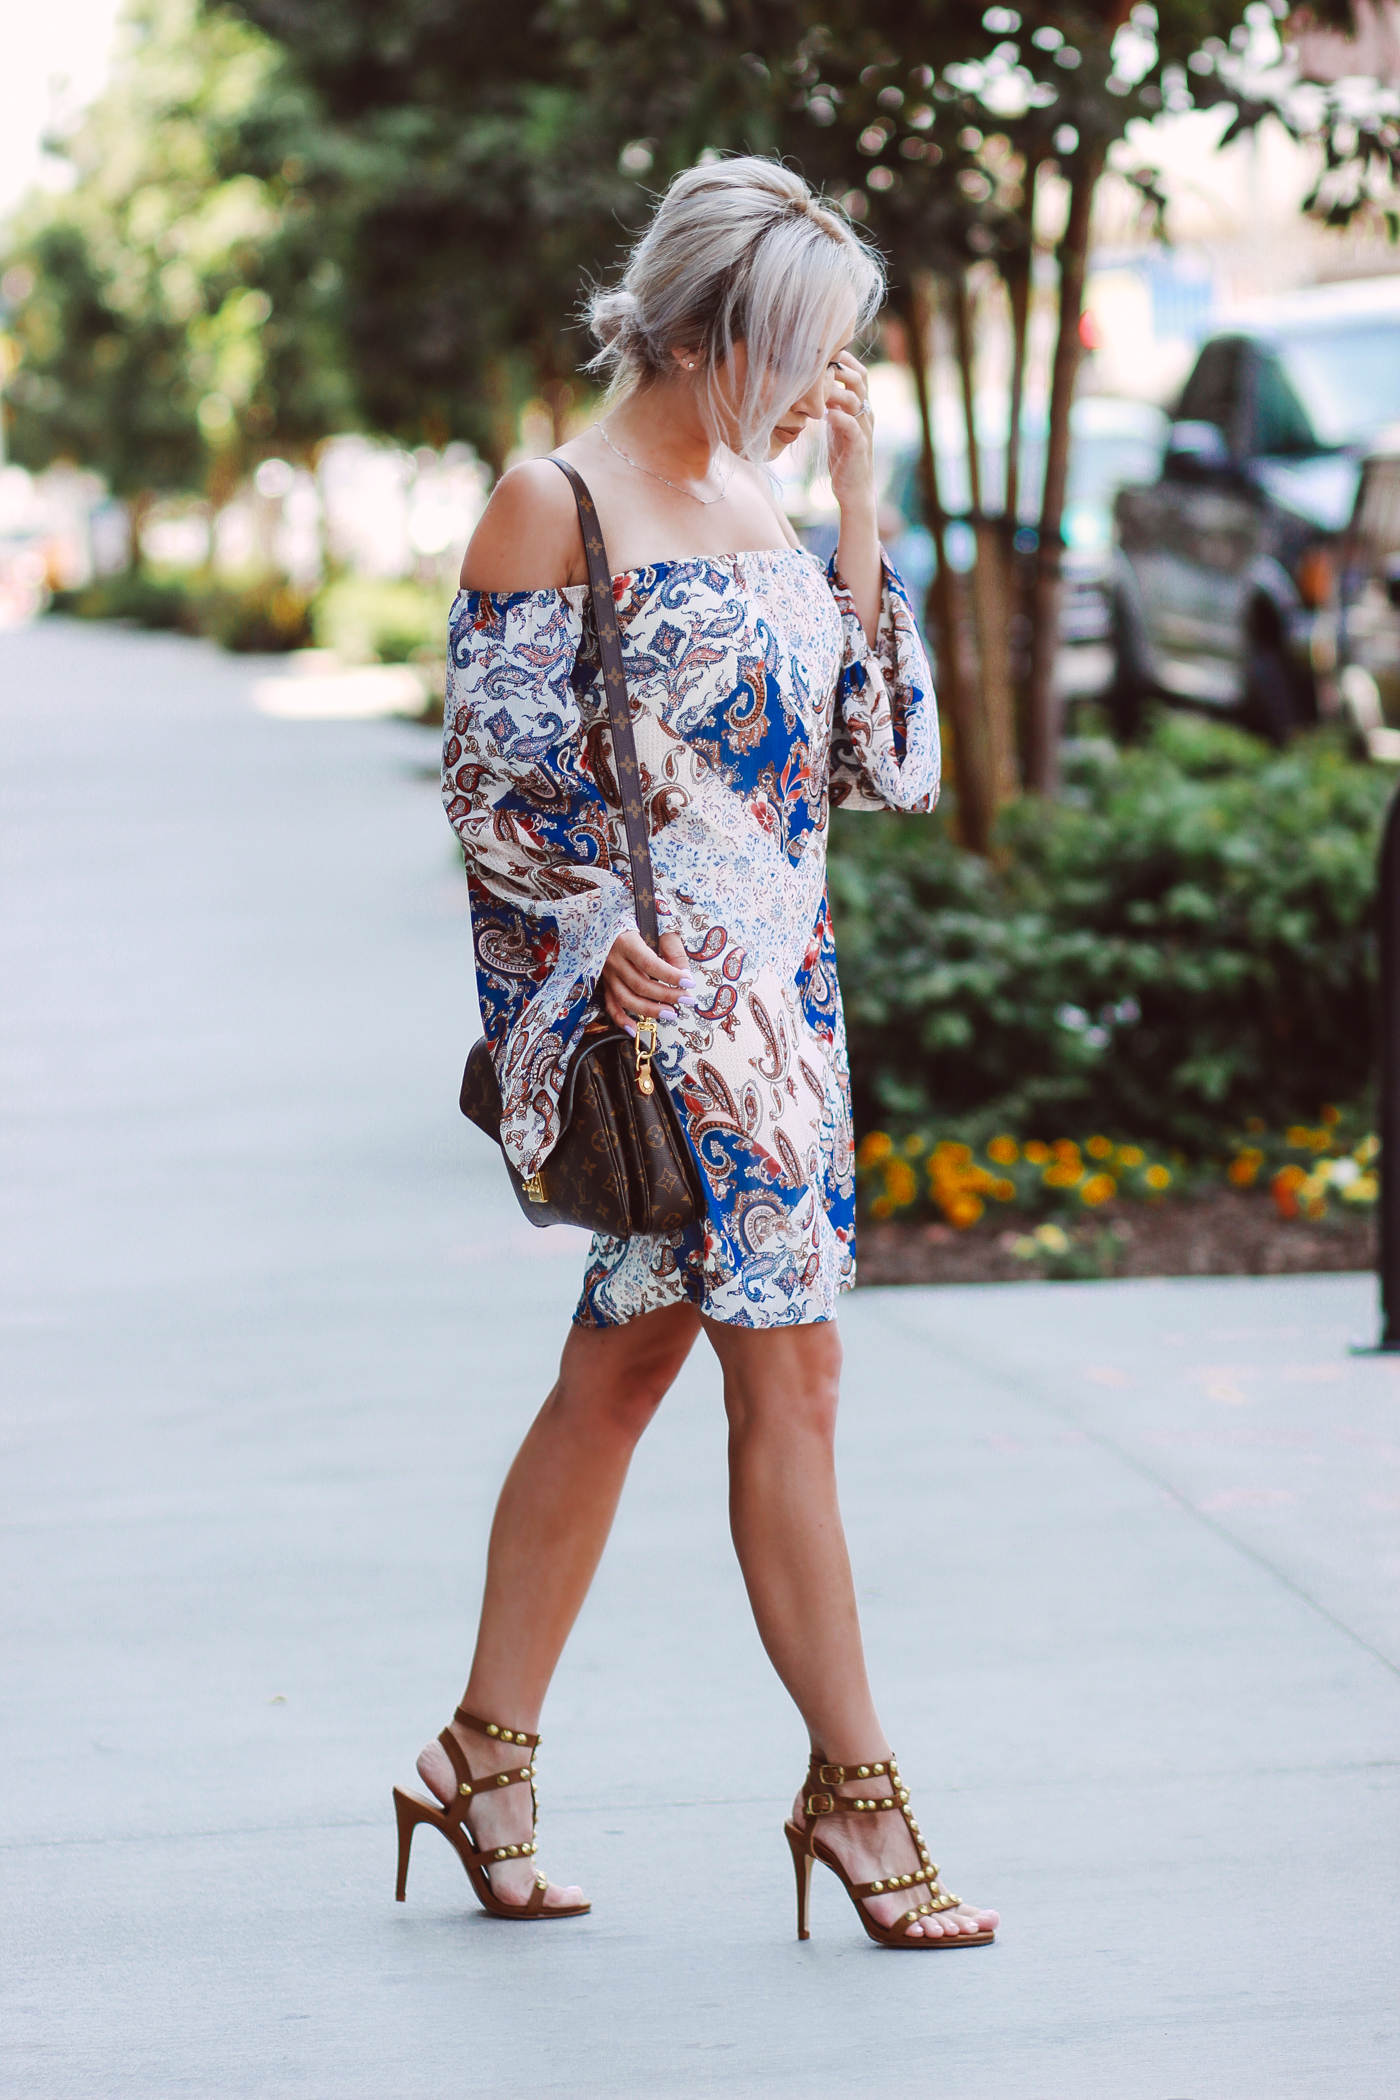 Blondie in the City | Paisley Print Dress | Louis Vuitton Pochette Metis Bag | Street Style